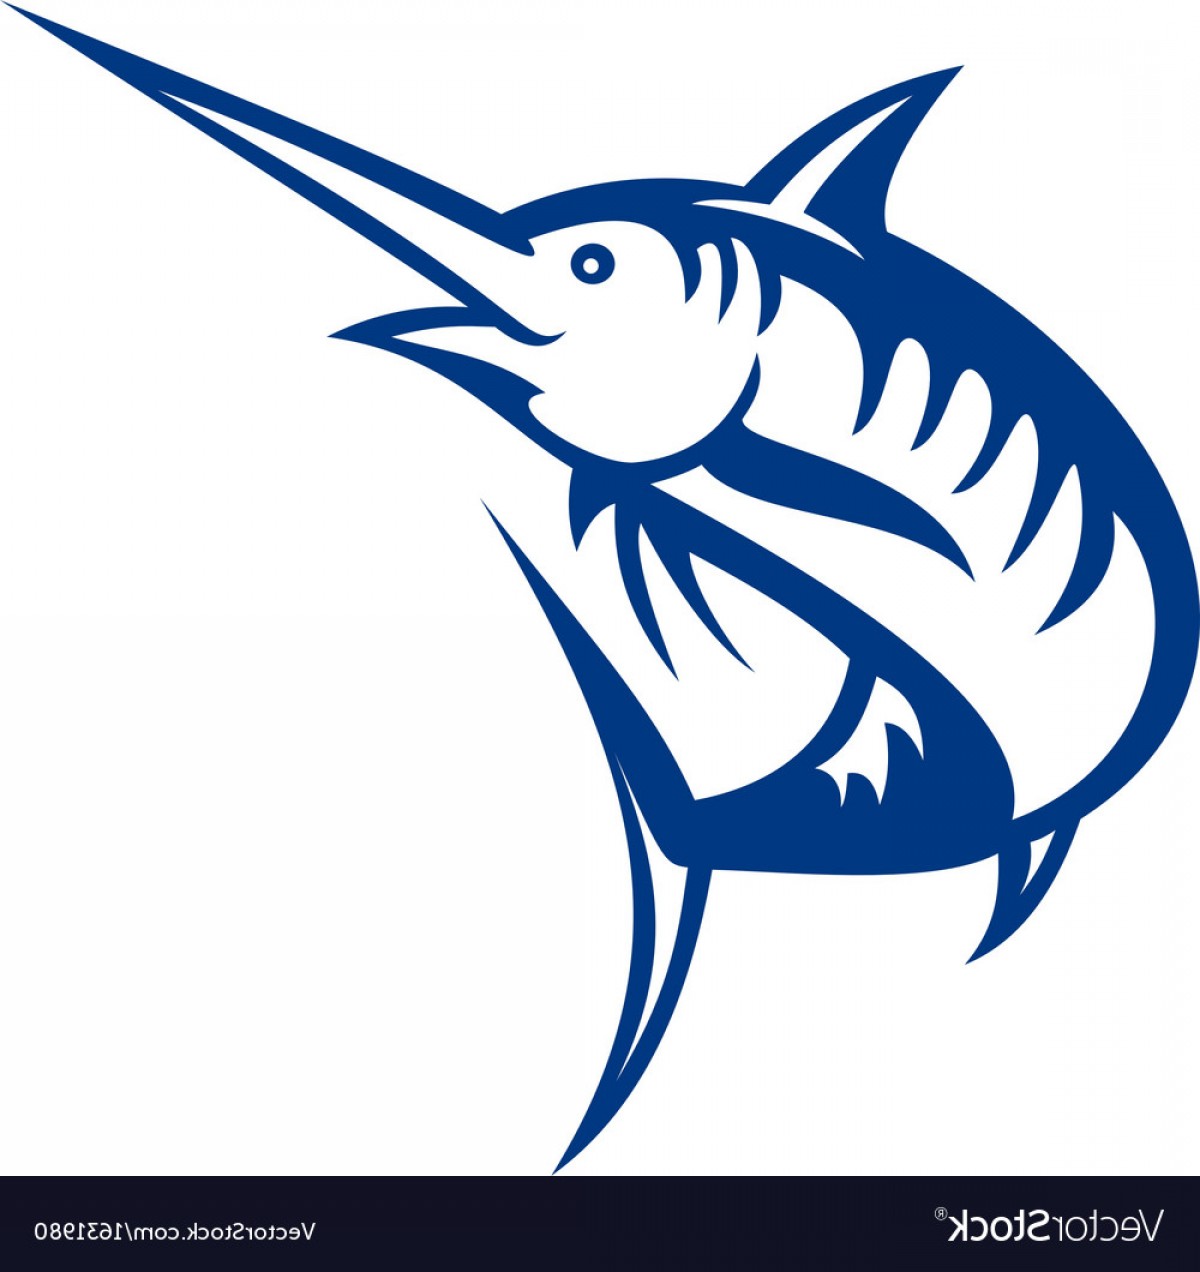 Download Marlin Fish Vector at Vectorified.com | Collection of ...